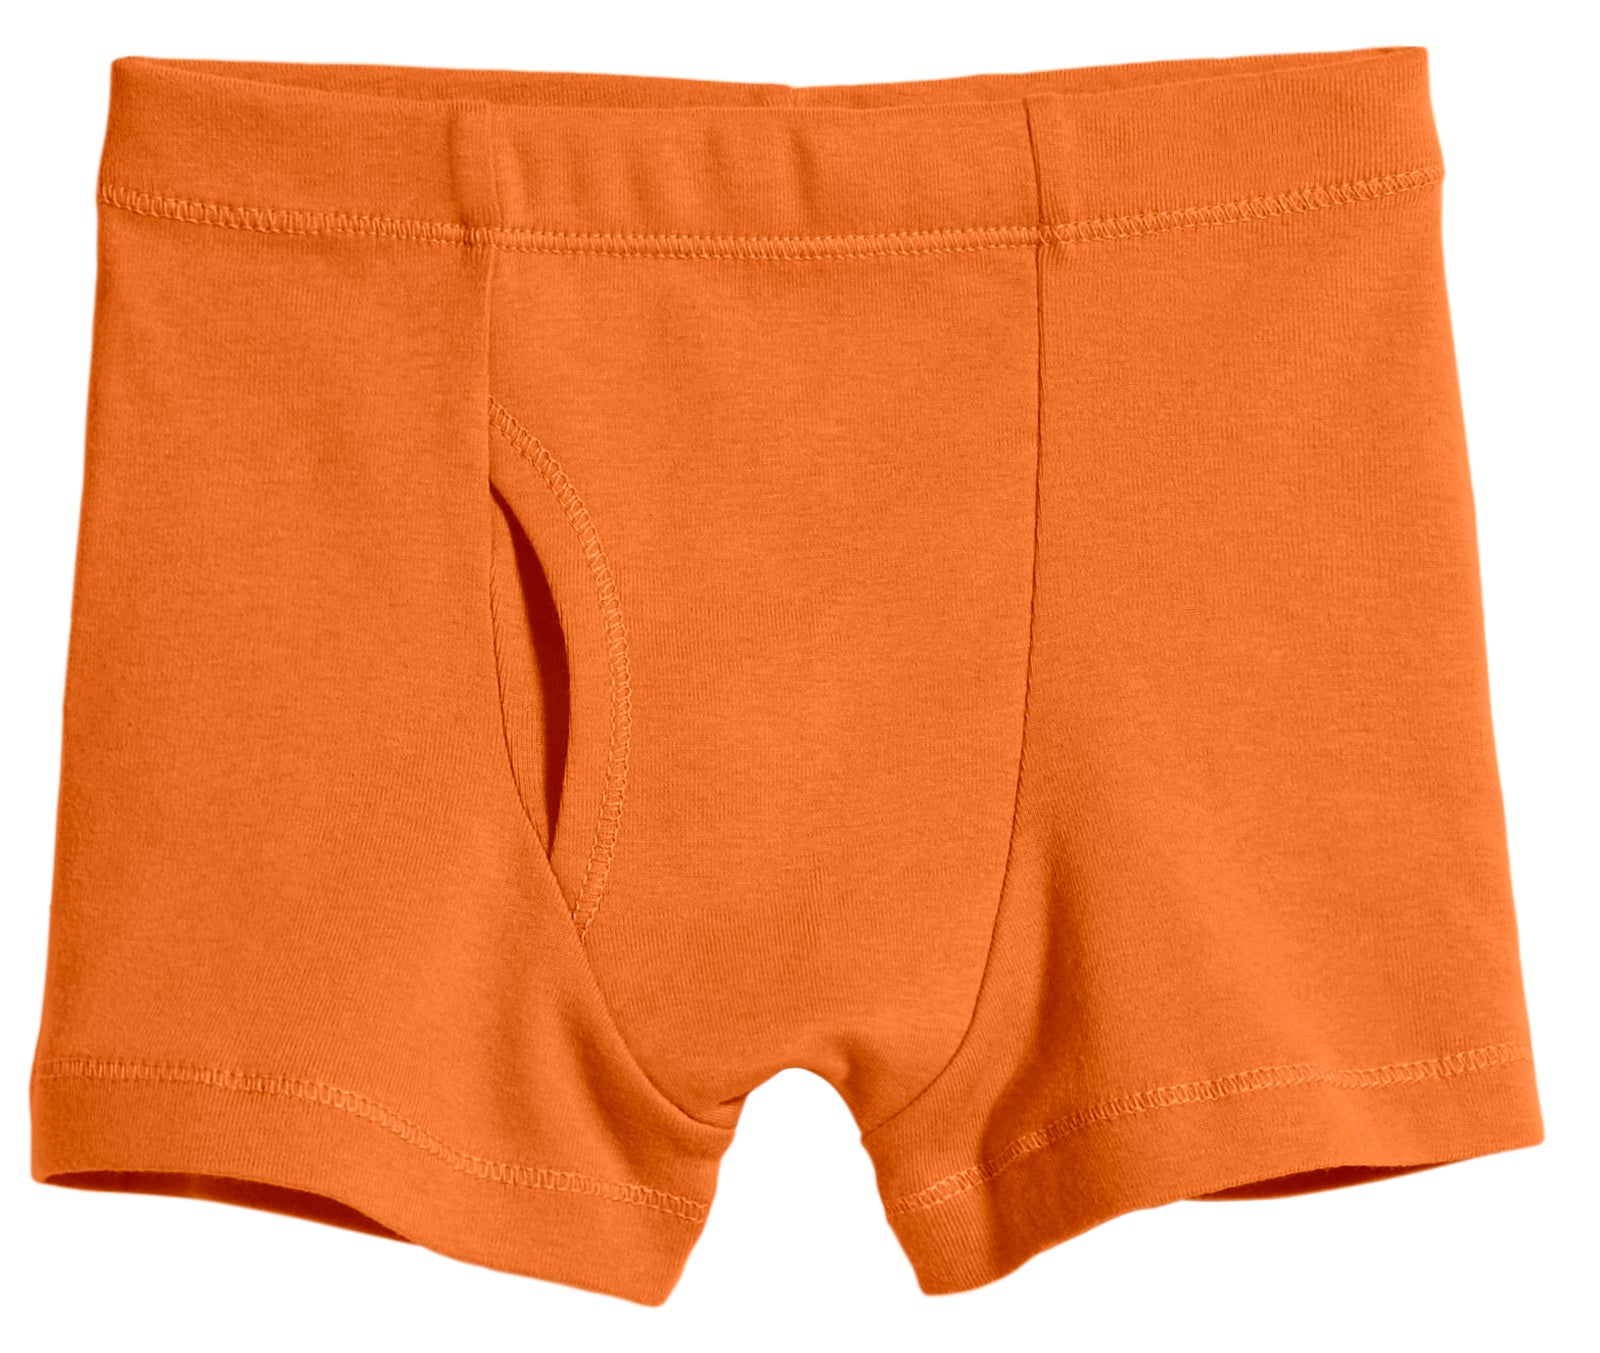 Hanes Boxer Briefs Underwear Toddler Boys 2T 3T Unboxing Pre